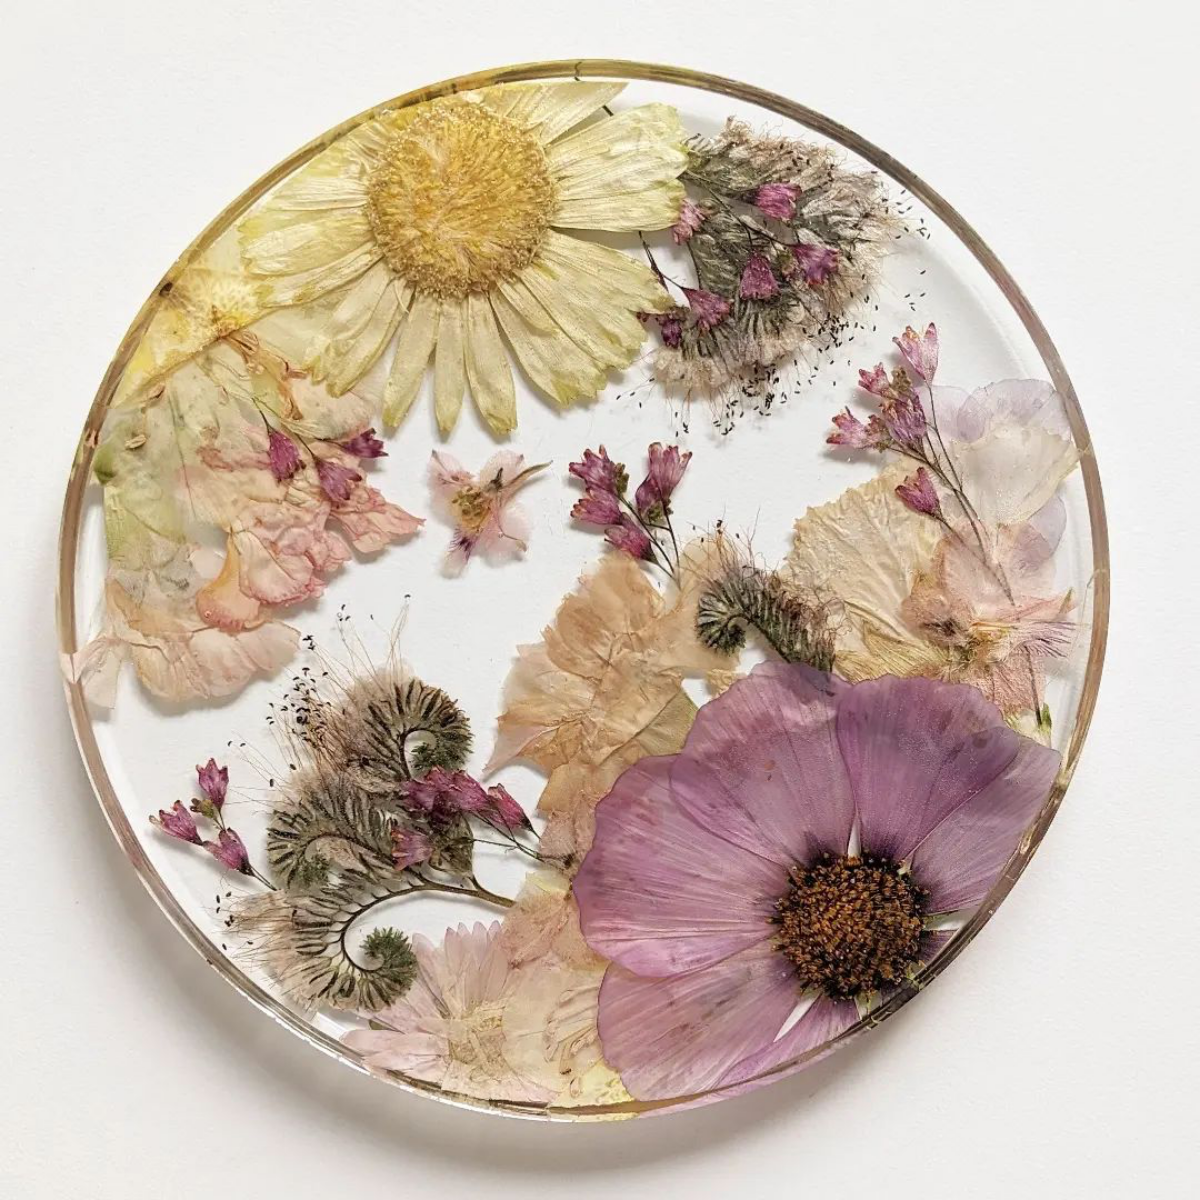 preserved flowers in resin